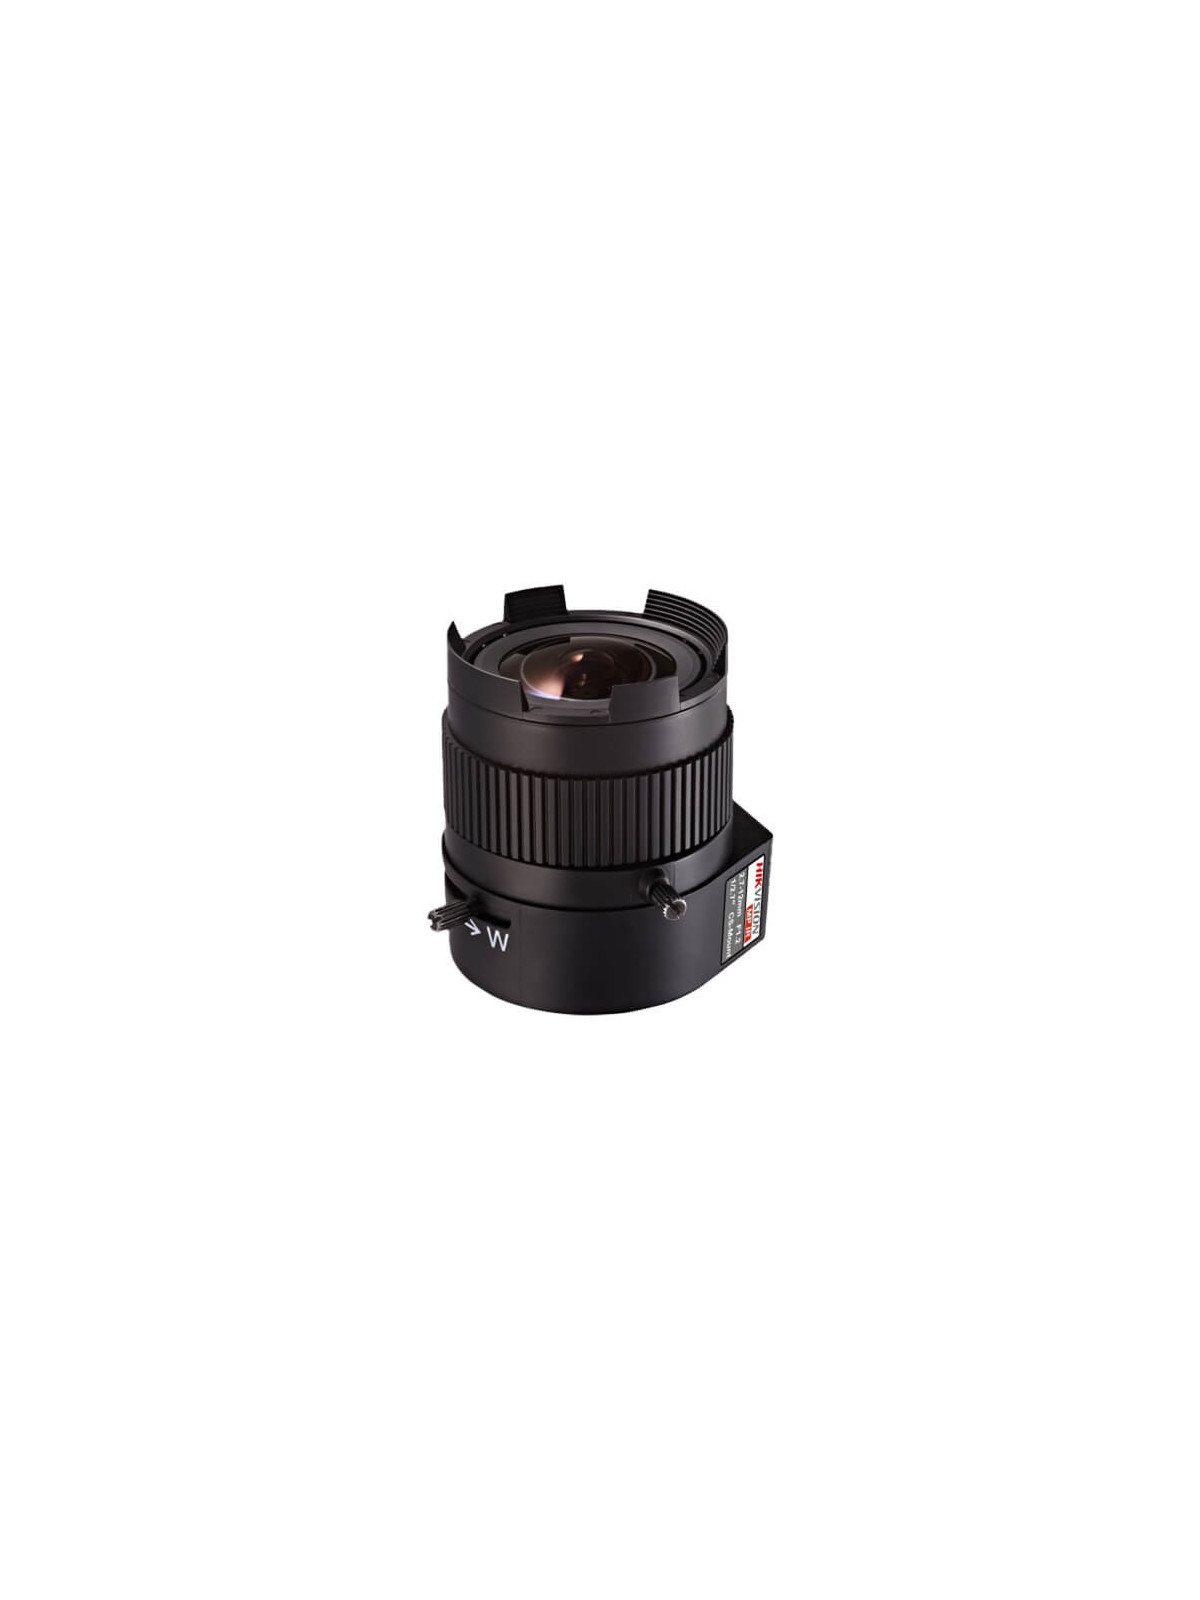 Óptica varifocal auto iris para cámara  2.7 - 12mm 3MP TV2712D-MPIR